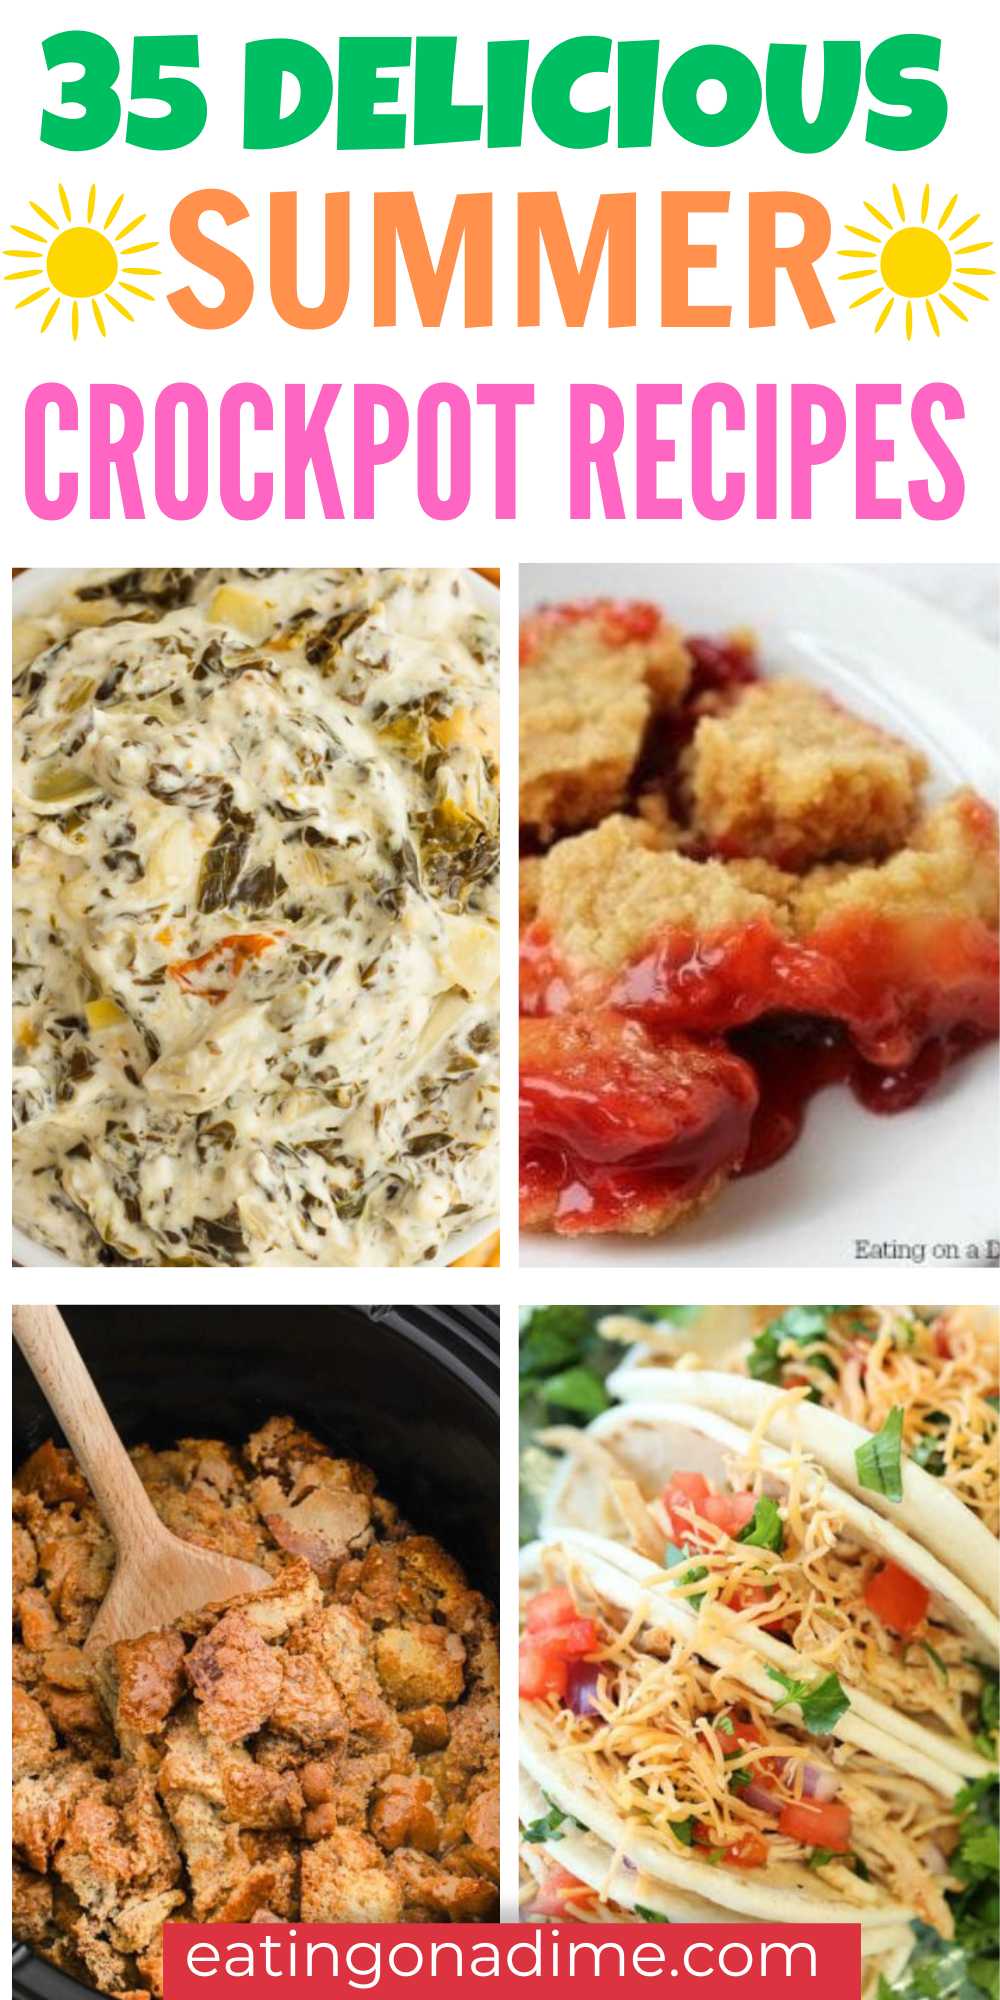 Easy Summer Crockpot Recipes - Home. Made. Interest.